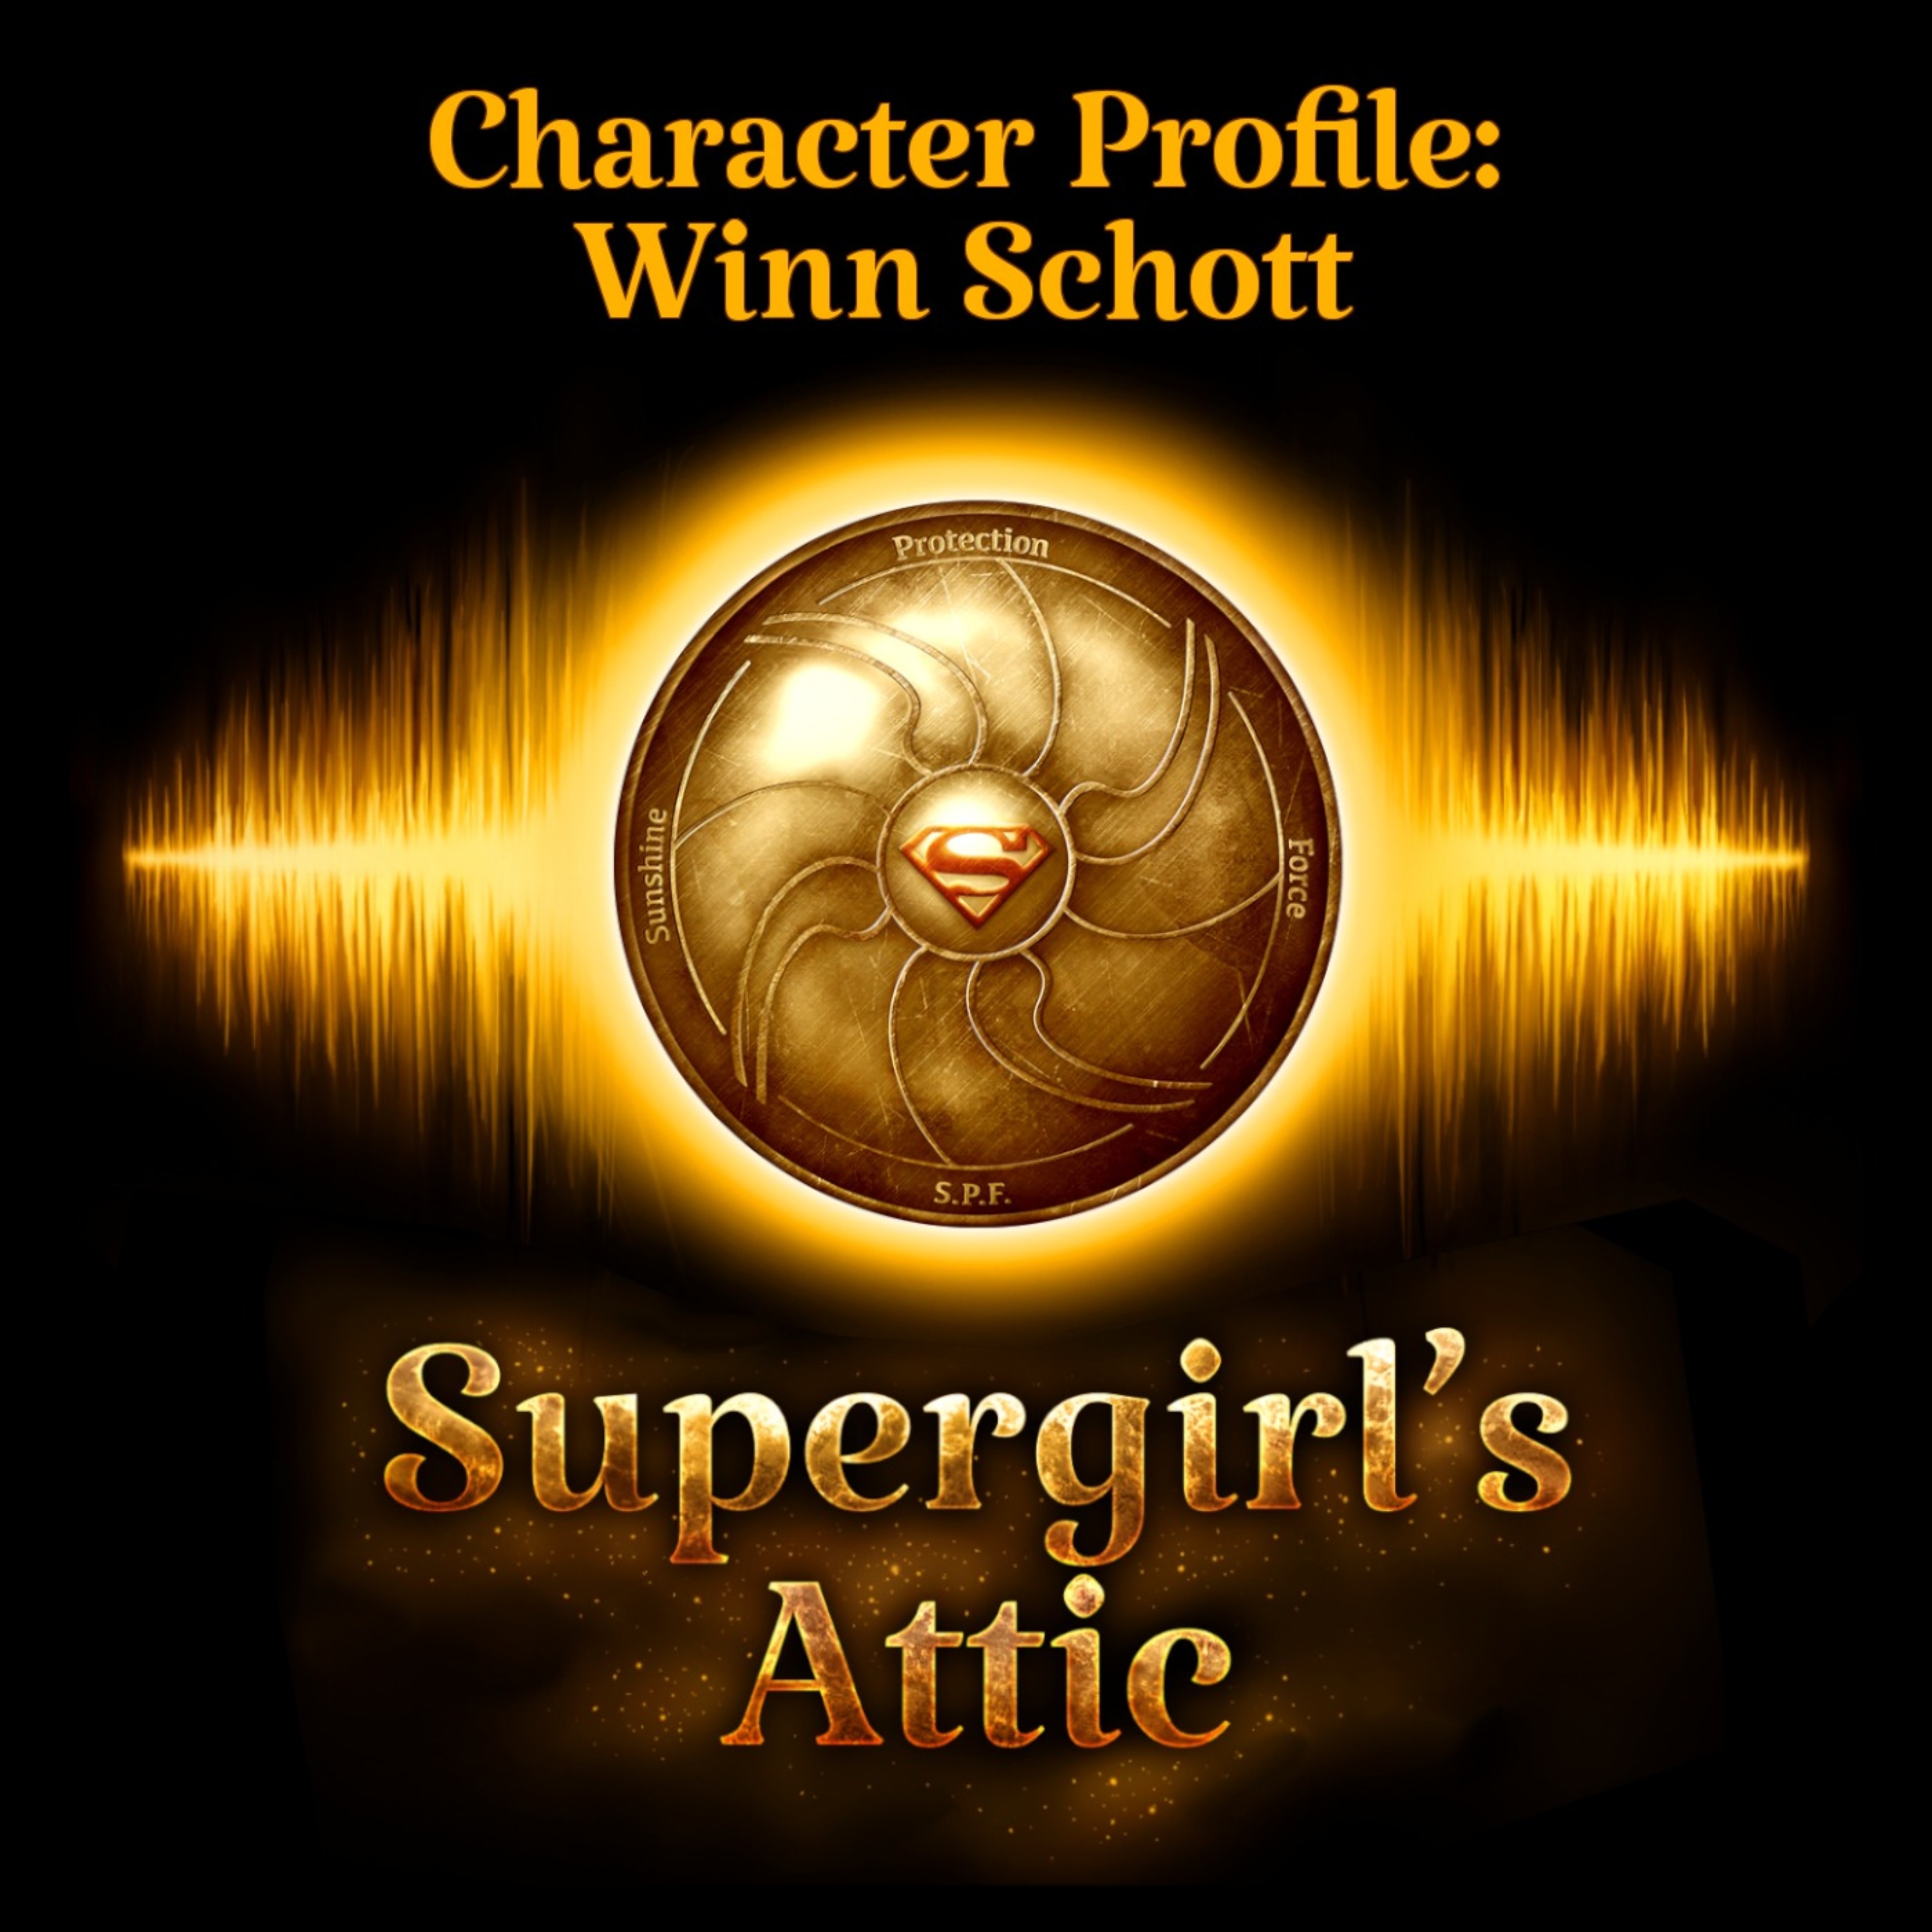 Character Profile: Winn Schott